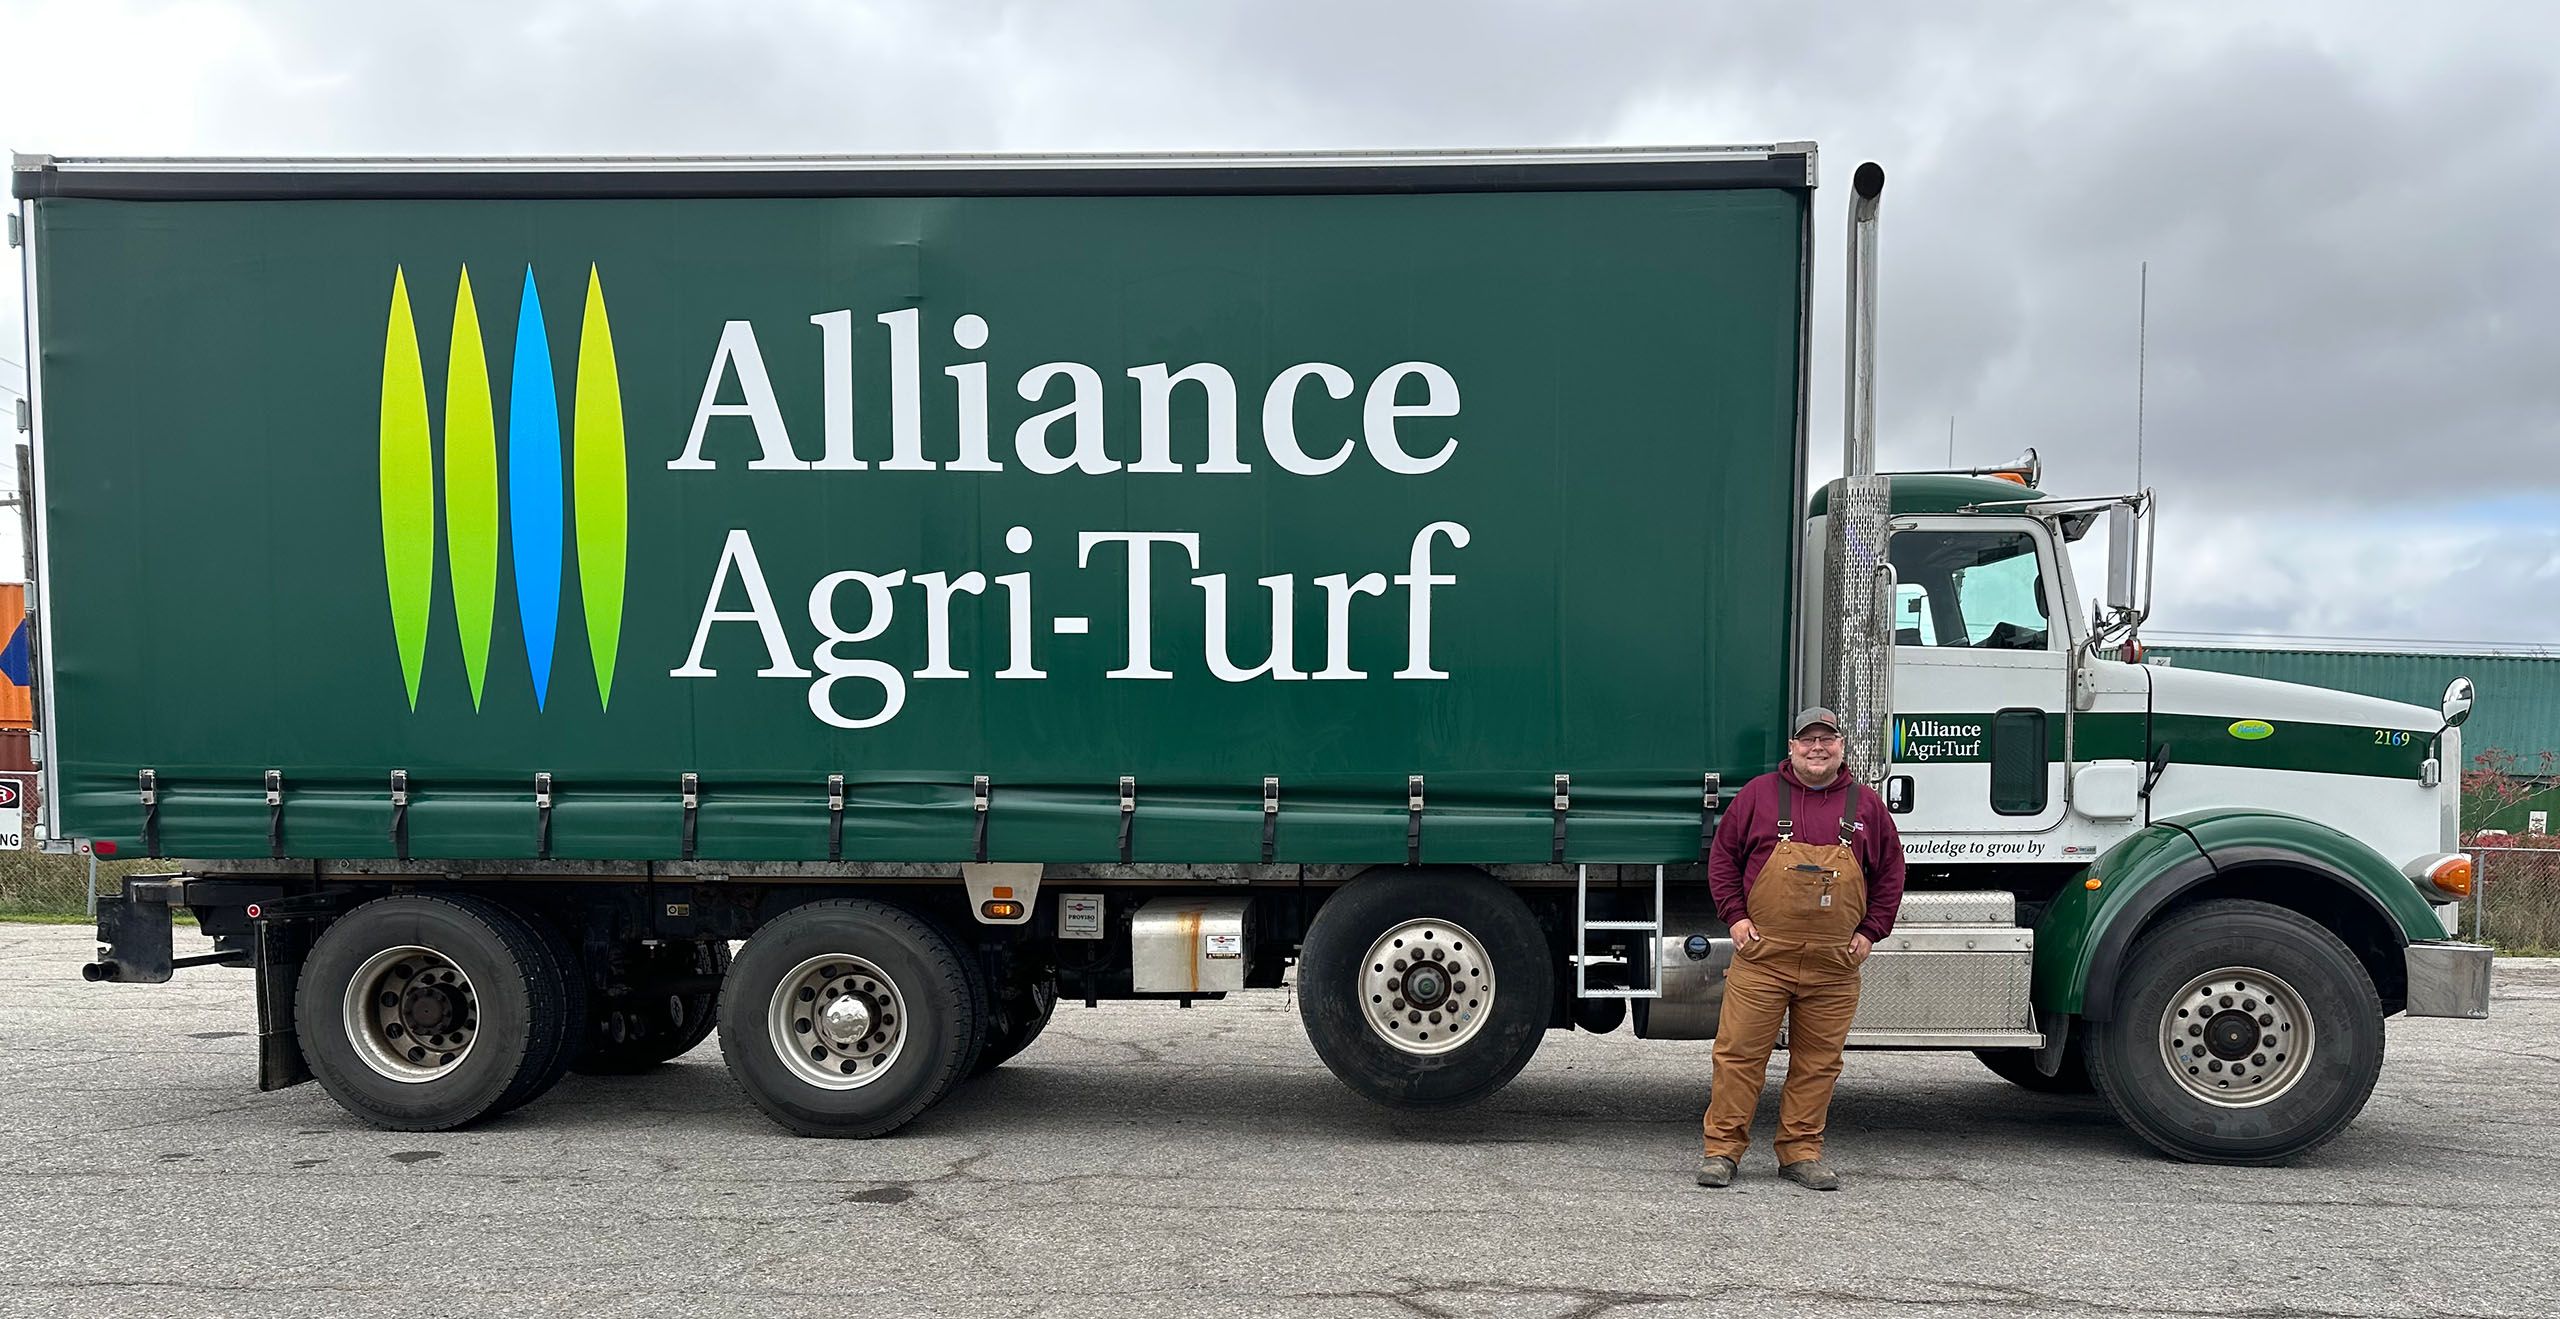 Alliance Agri-Turf employee standing beside truck